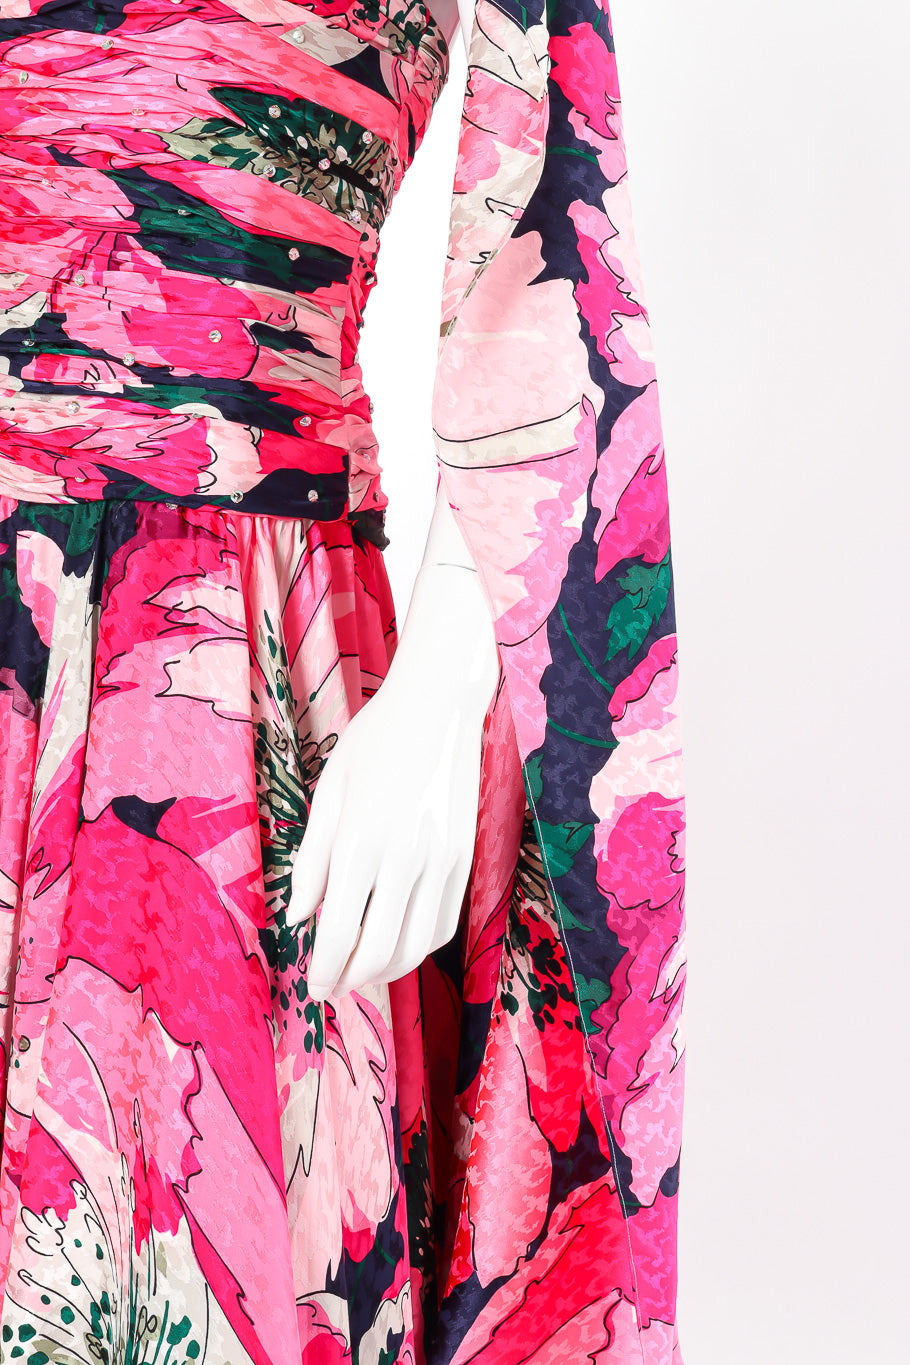 Flutter dress by Ruben Panis on mannequin arm close @recessla